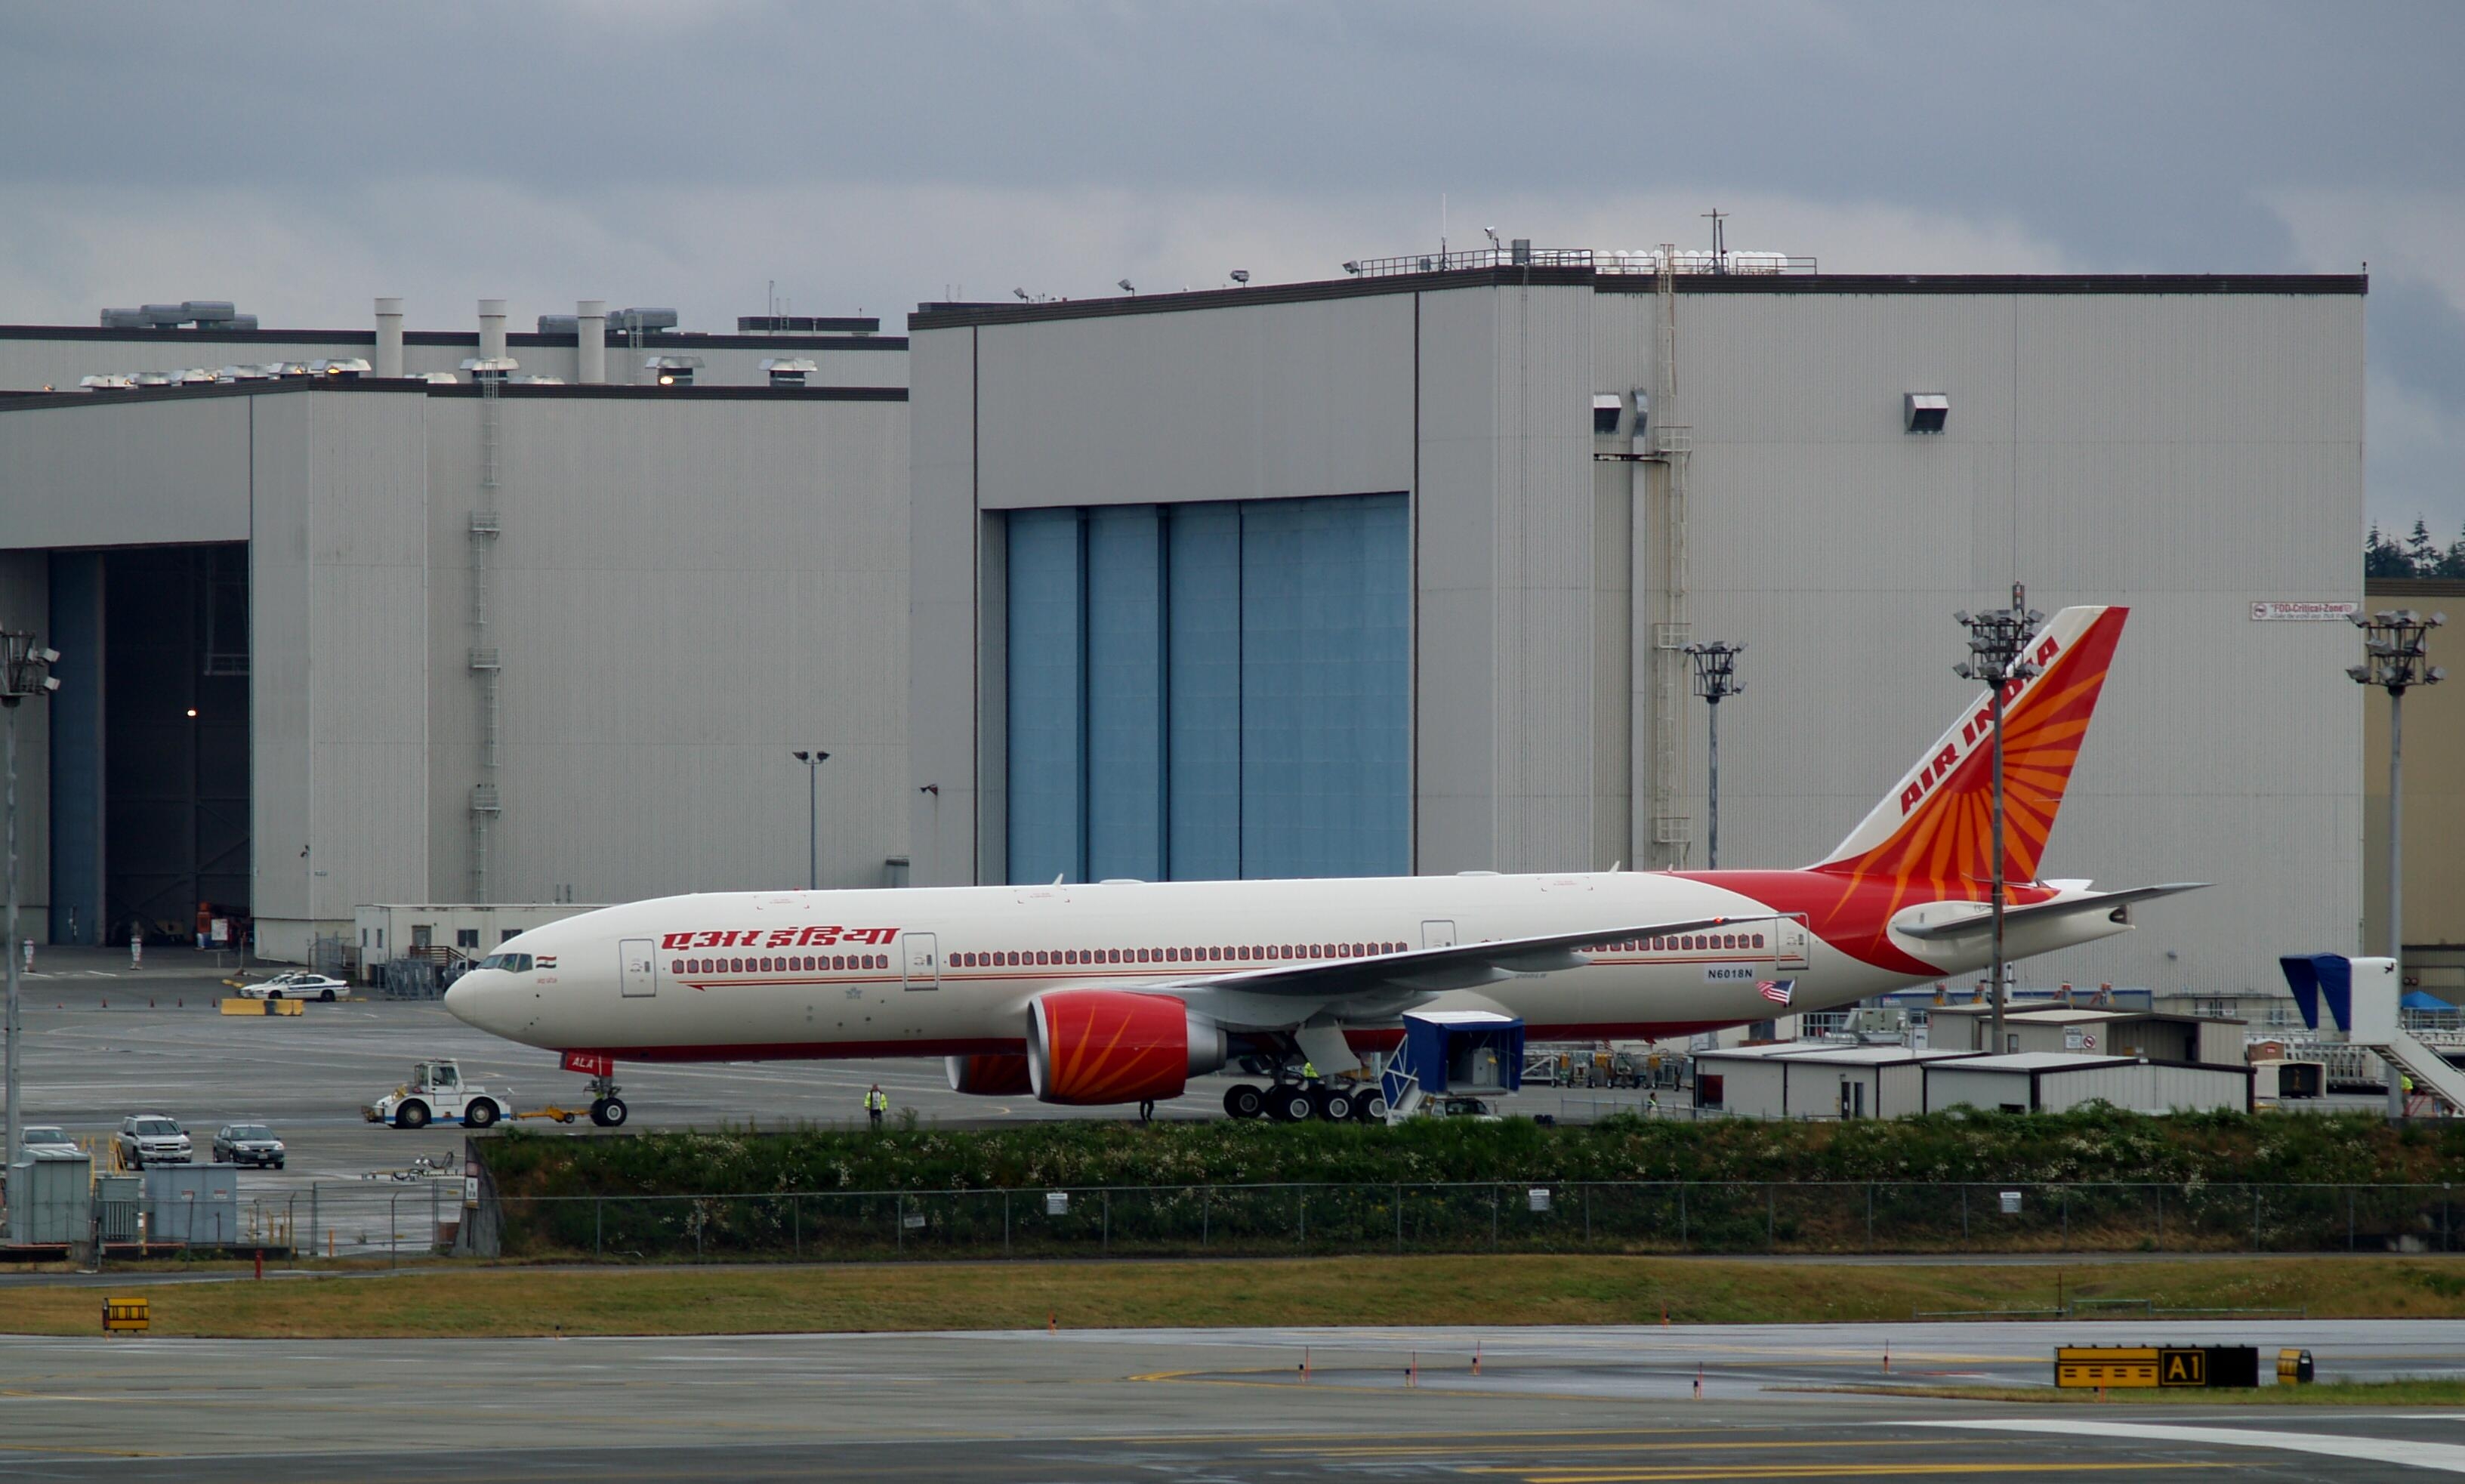 Air India 777-200LR test flight